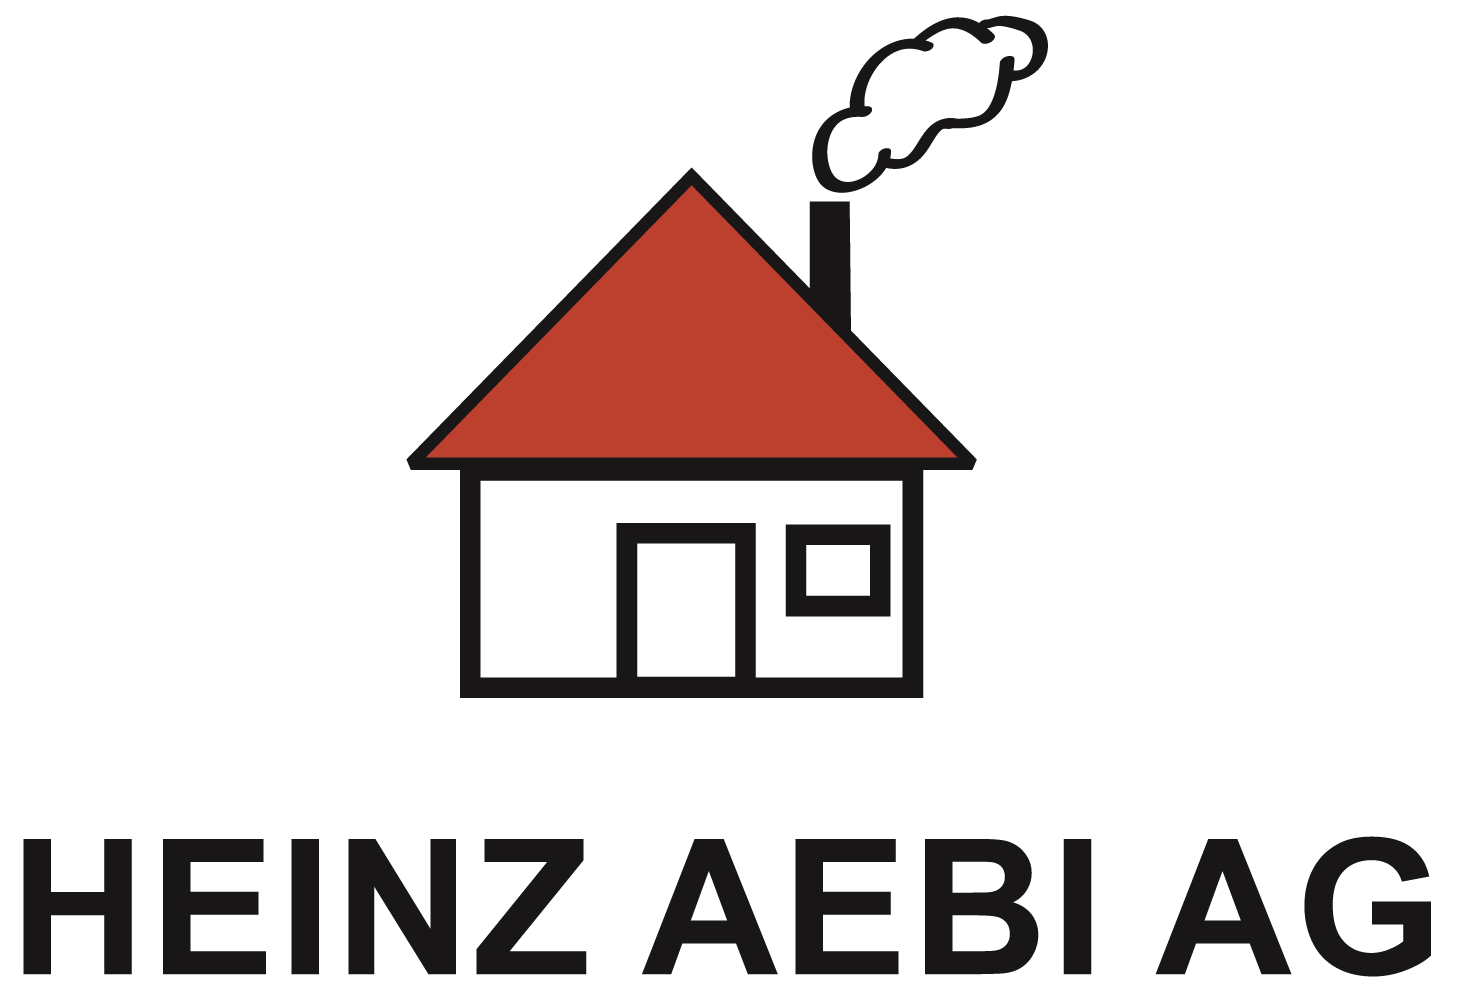 Heinz Aebi AG